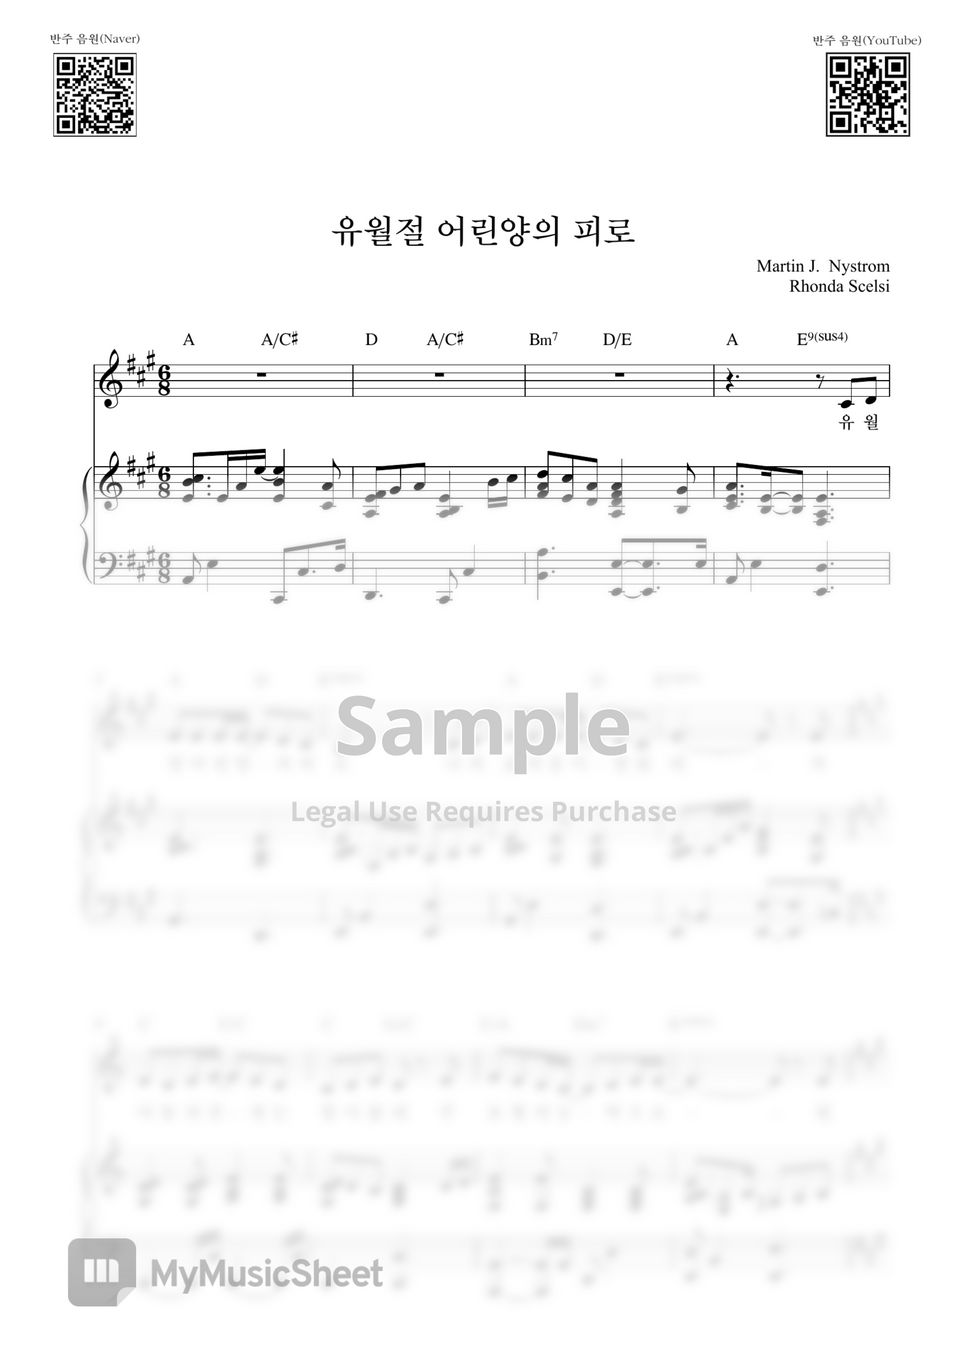 Martin J. Nystrom - 유월절 어린 양의 피로(Under the blood) (피아노 3단) by Samuel Park